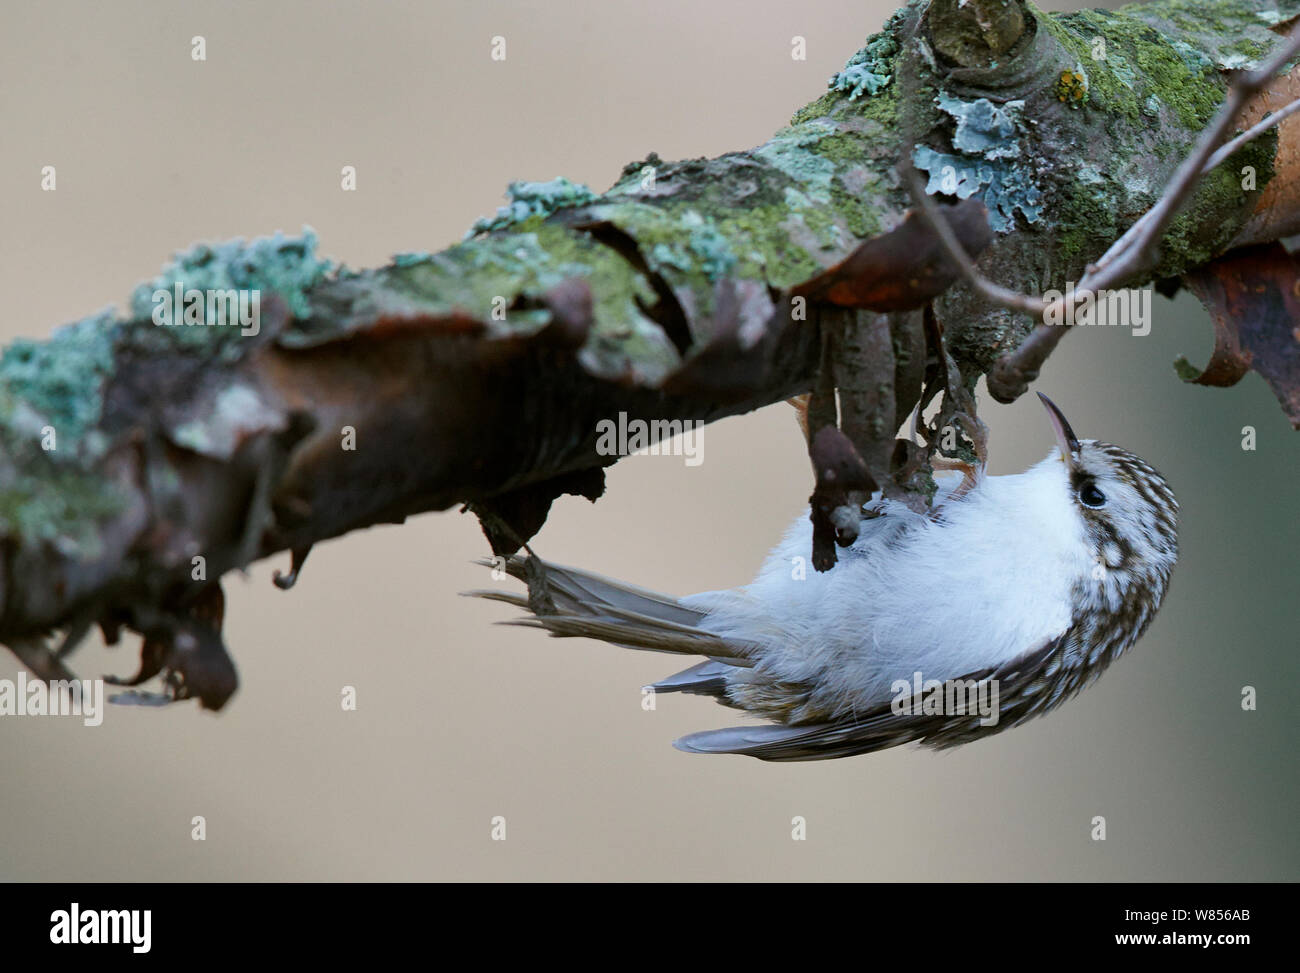 Common Treecreeper (Certhia familiaris) searching for insect prey under bark on branch, Uto Finland November Stock Photo